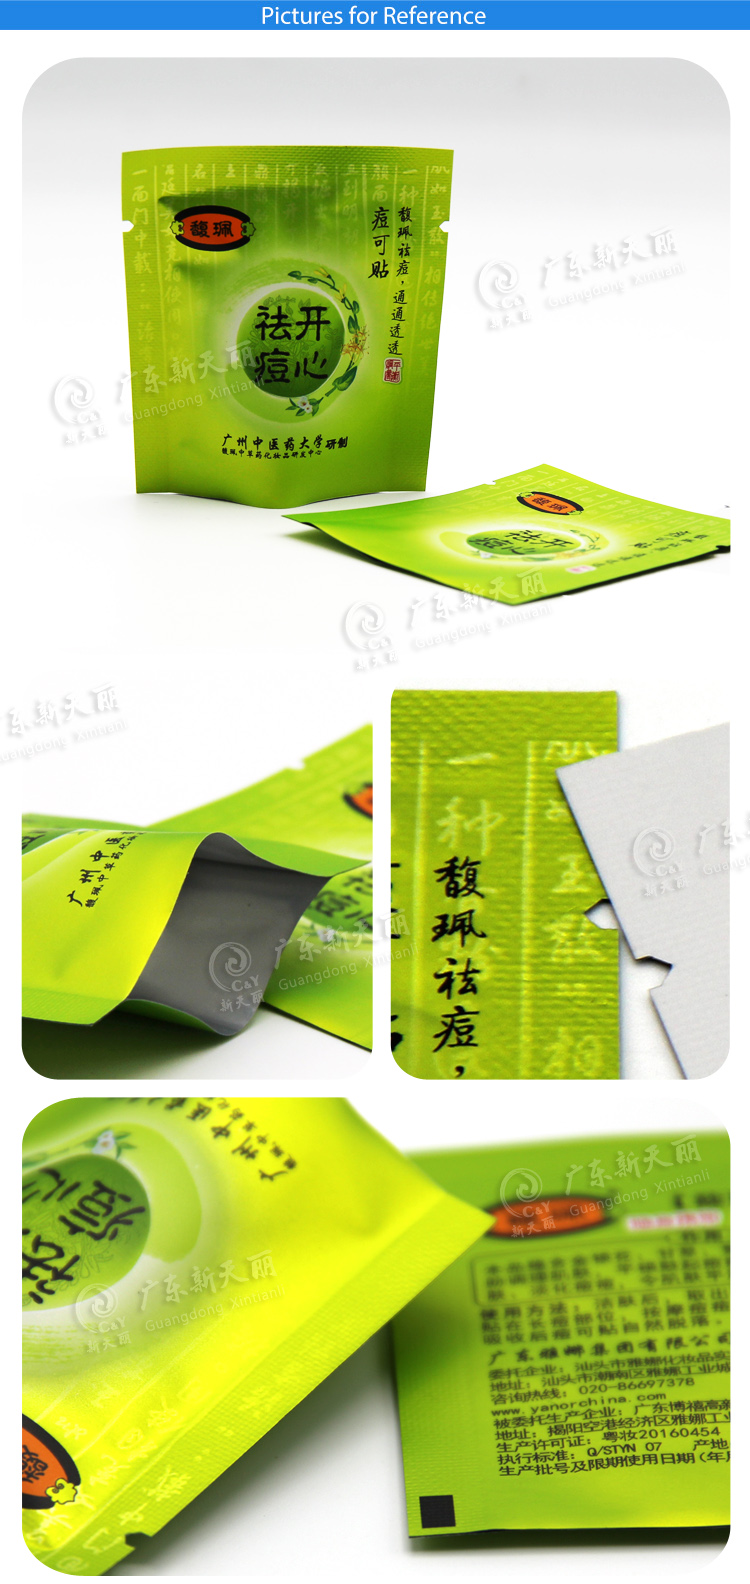 China factory supply full color printed aluminum foil mylar bag small packaging sachet for tea bag cosmetic sample